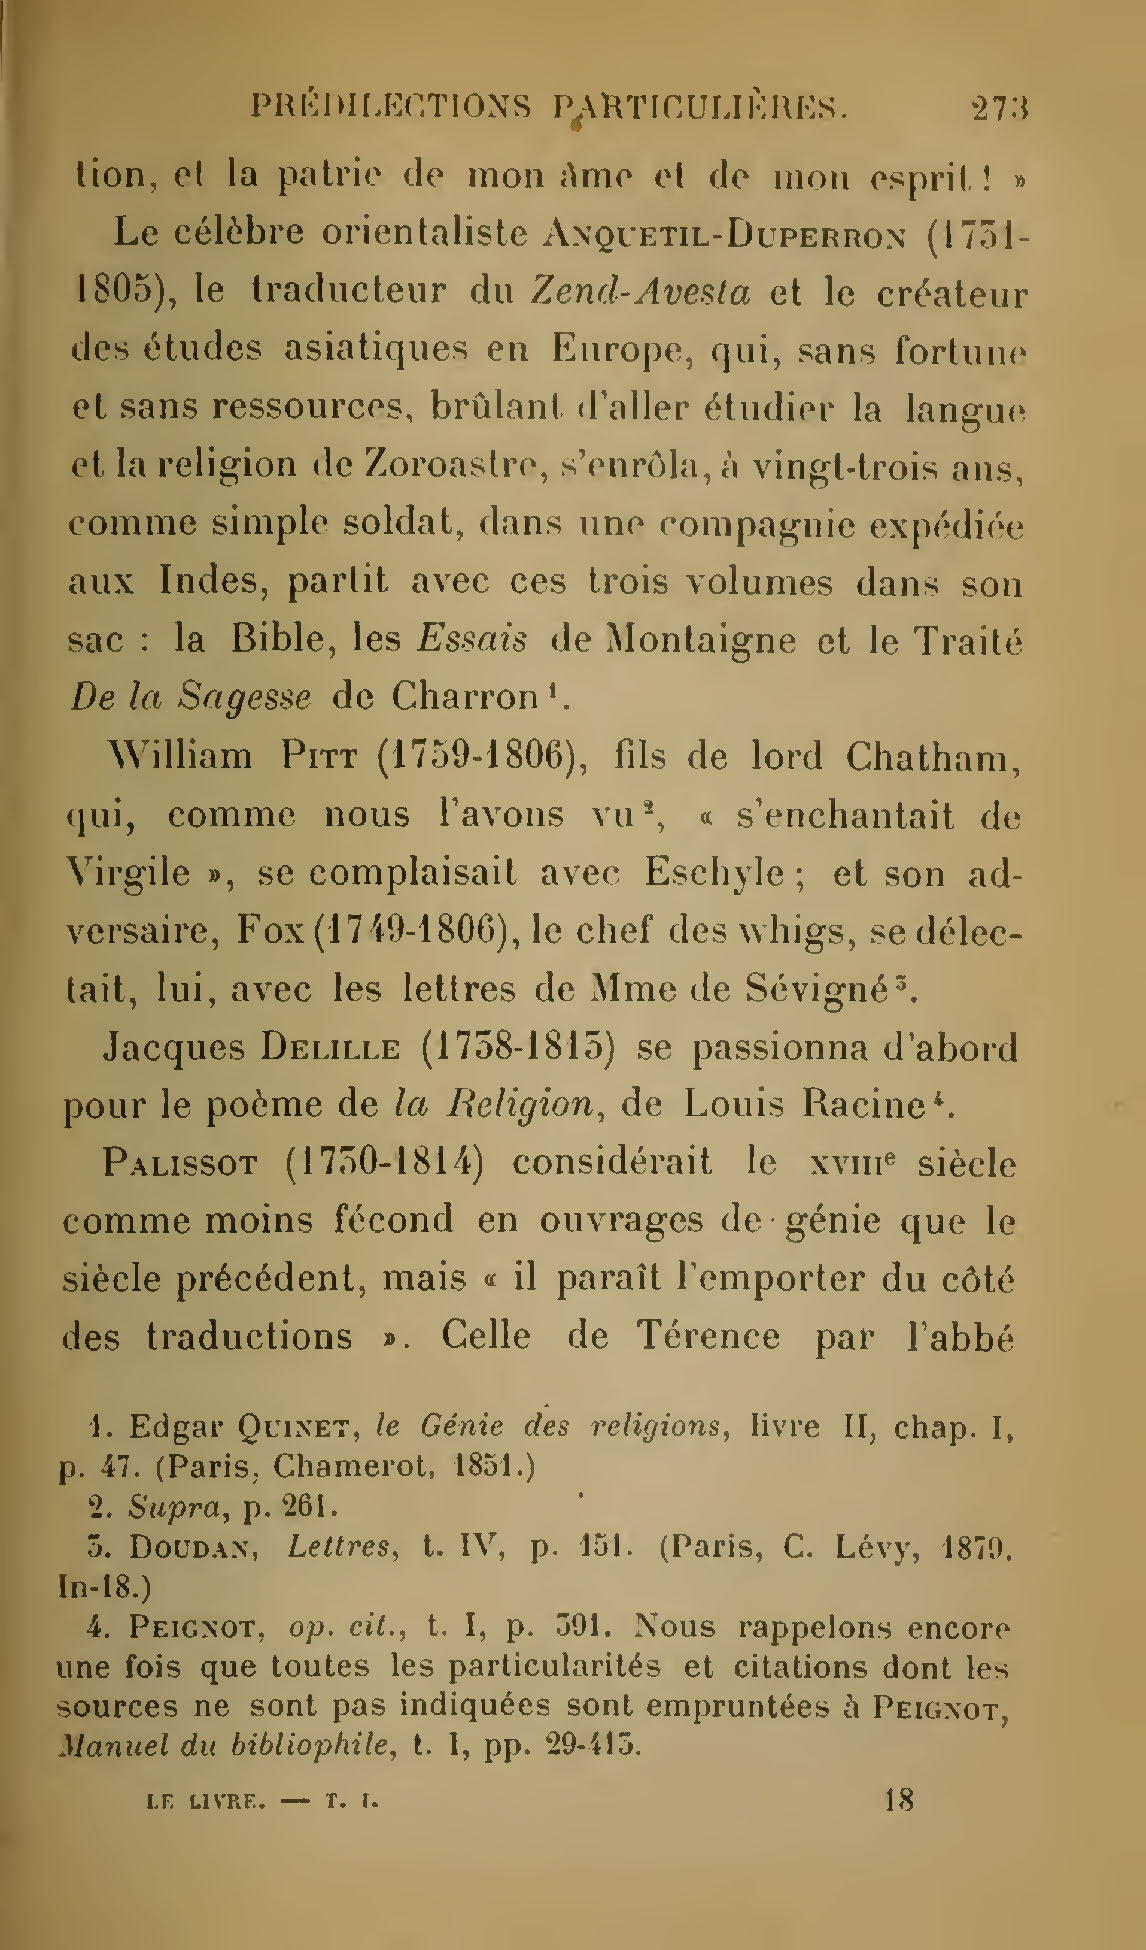 Albert Cim, Le Livre, t. I, p. 273.